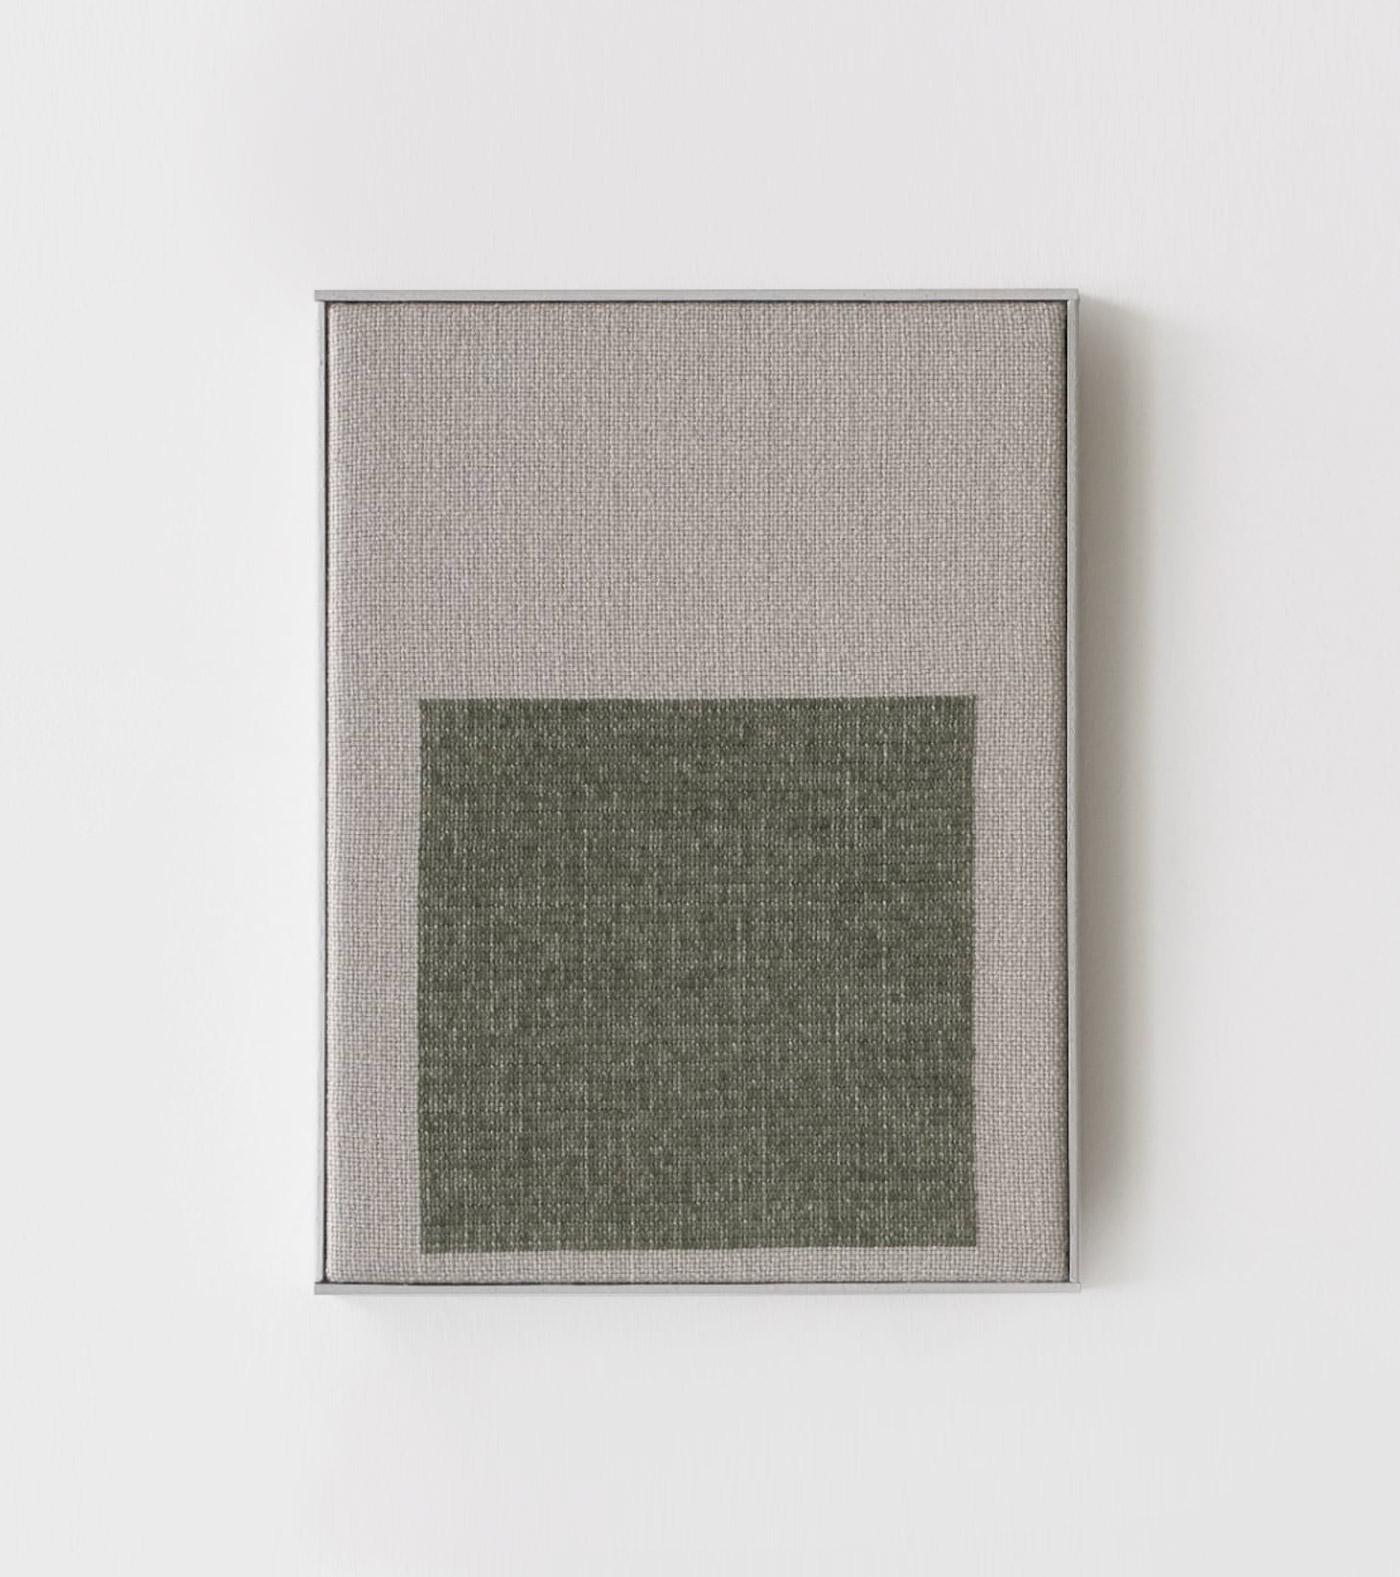 © Chris Liljenberg Halstrøm, Low Entity 7.021, 2020, Linen/cotton thread on wool, 30 x 40 cm